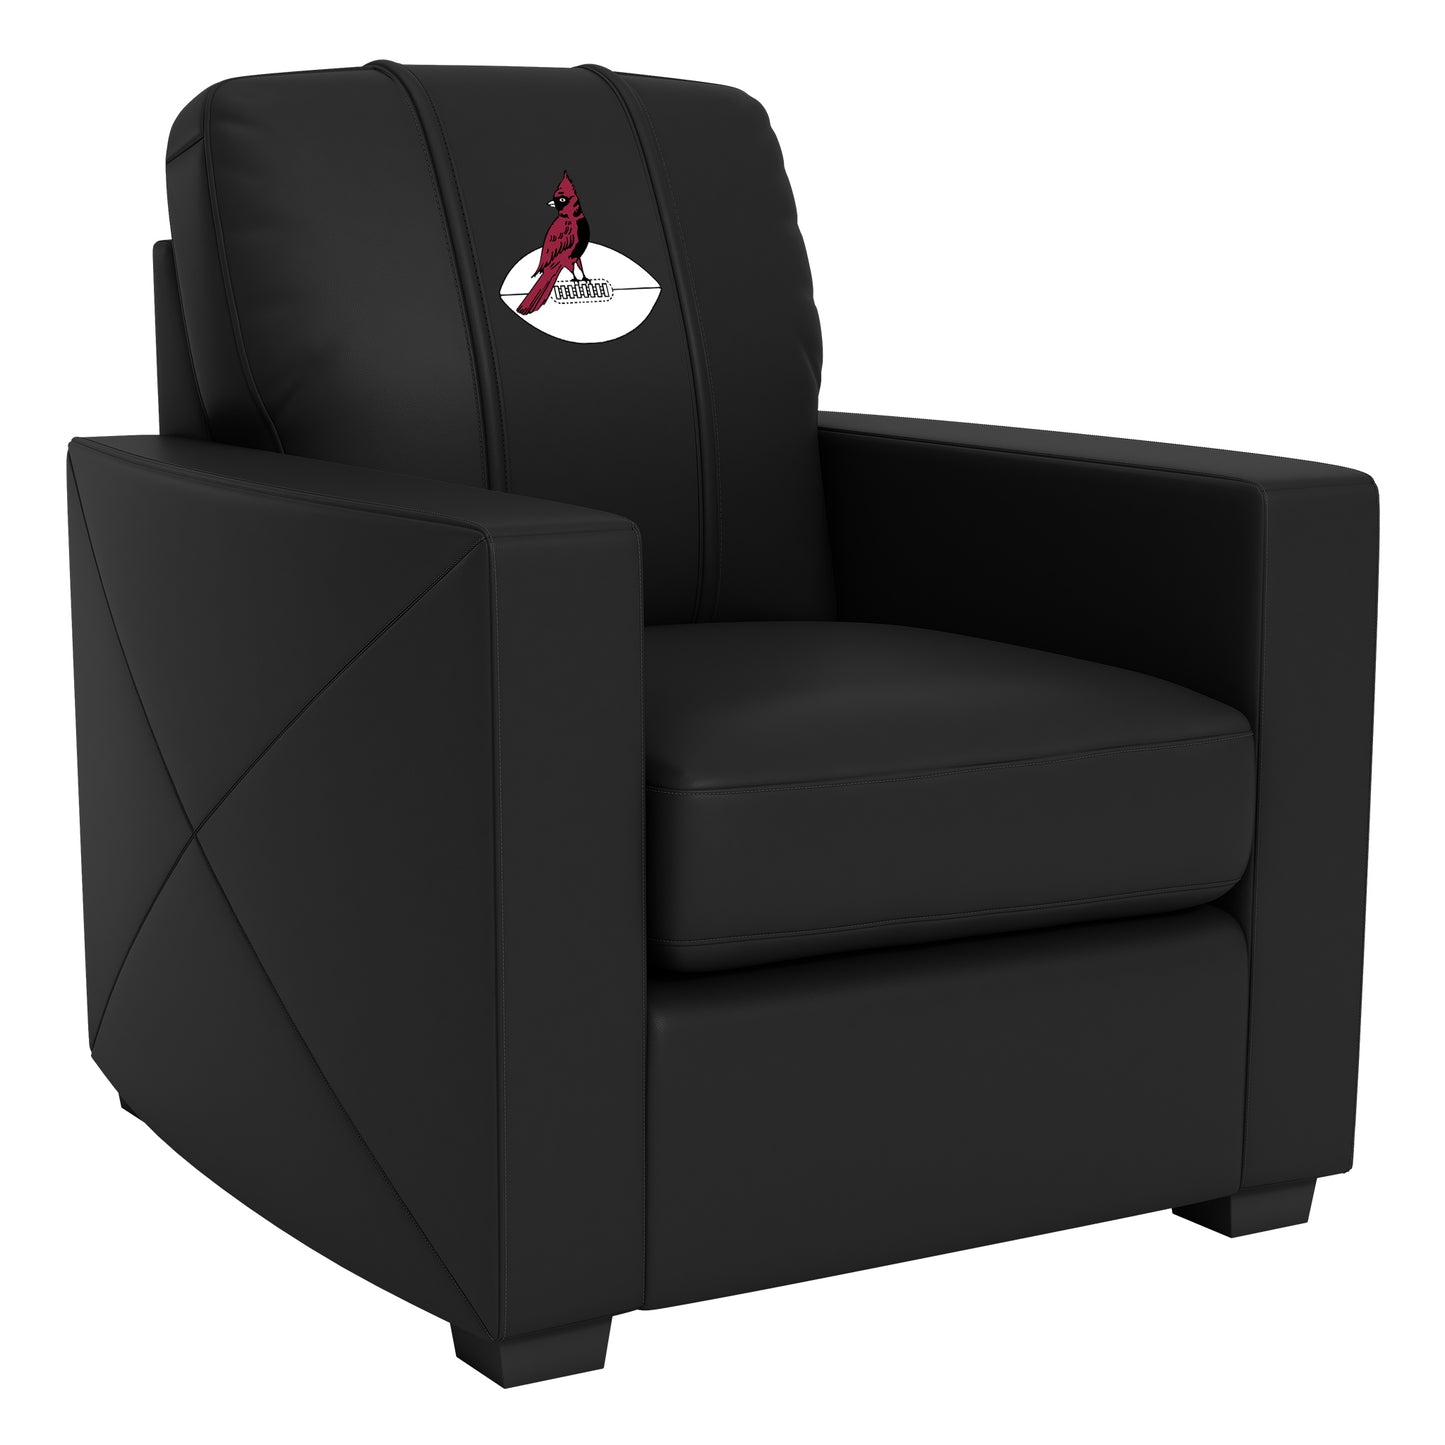 Silver Club Chair with Arizona Cardinals Classic Logo